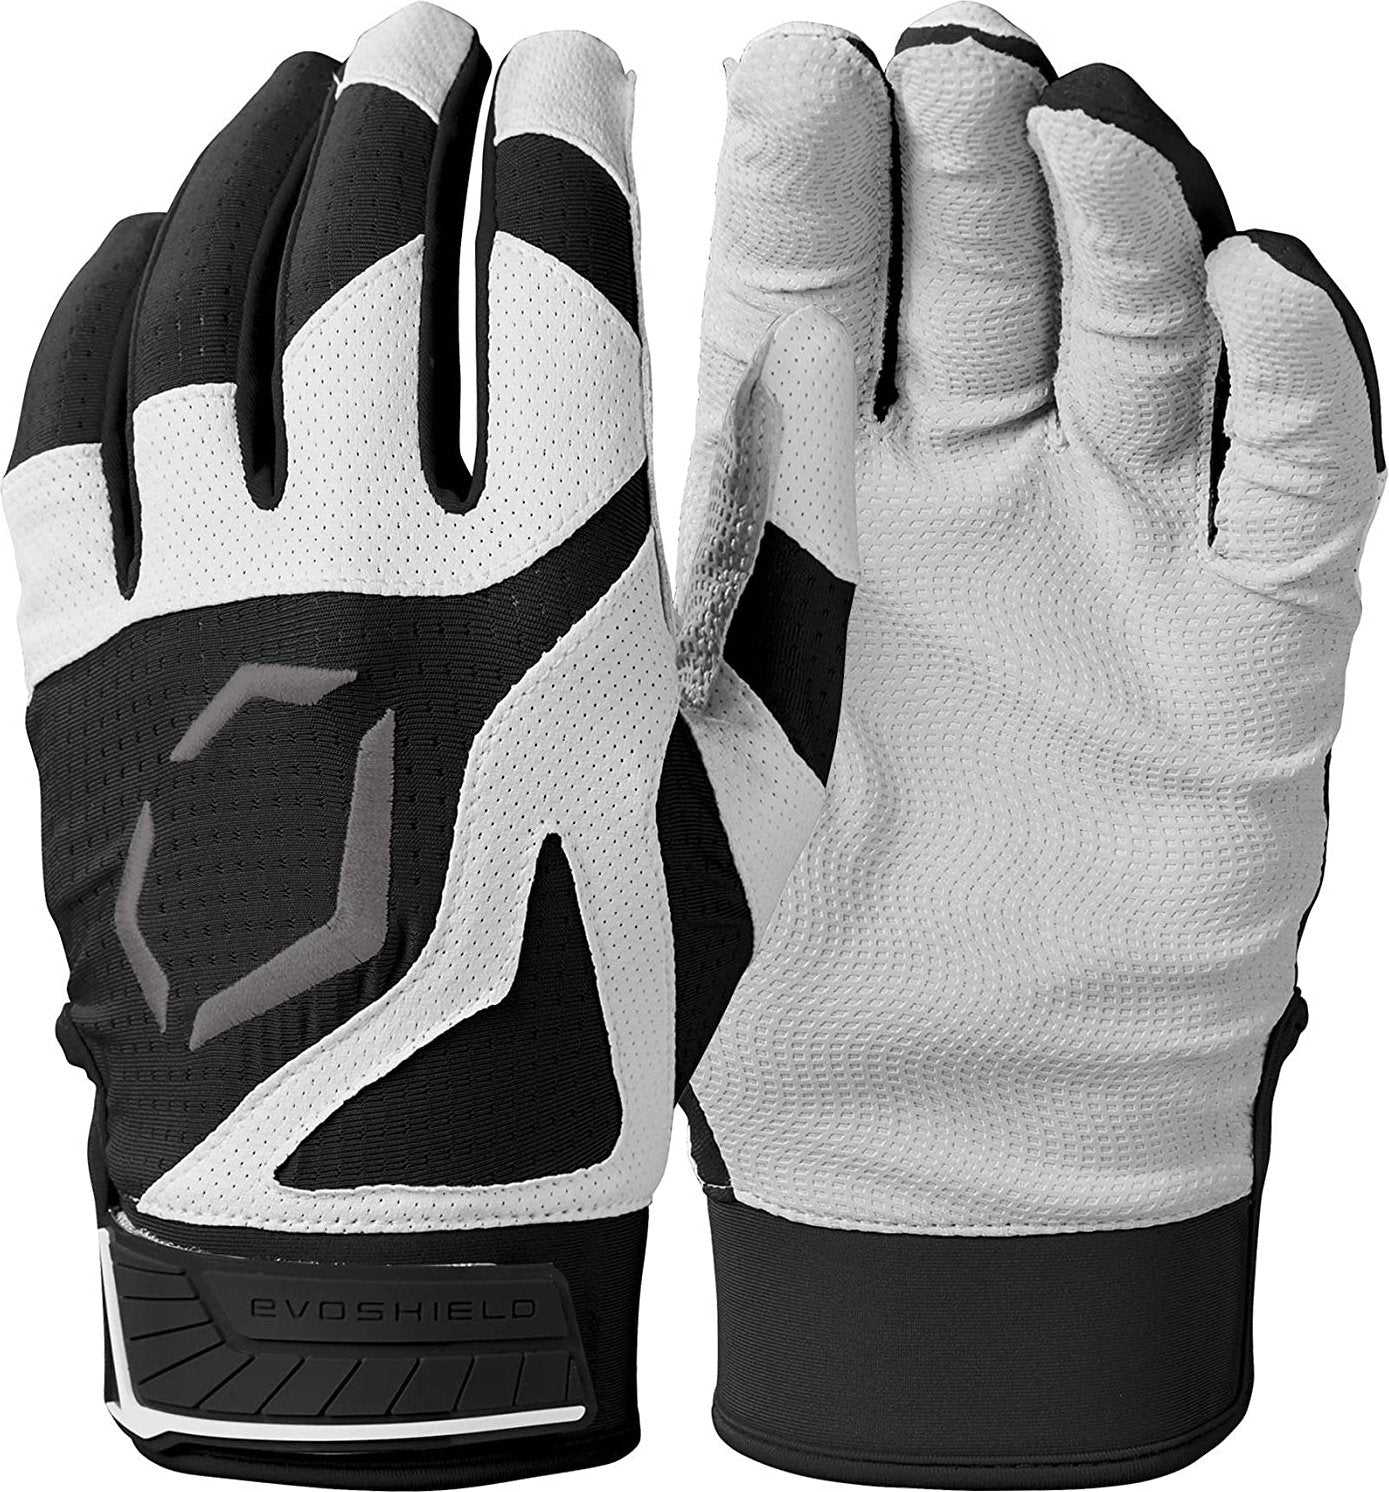 EvoShield Youth SRZ-1 Batting Gloves - Black - HIT A Double